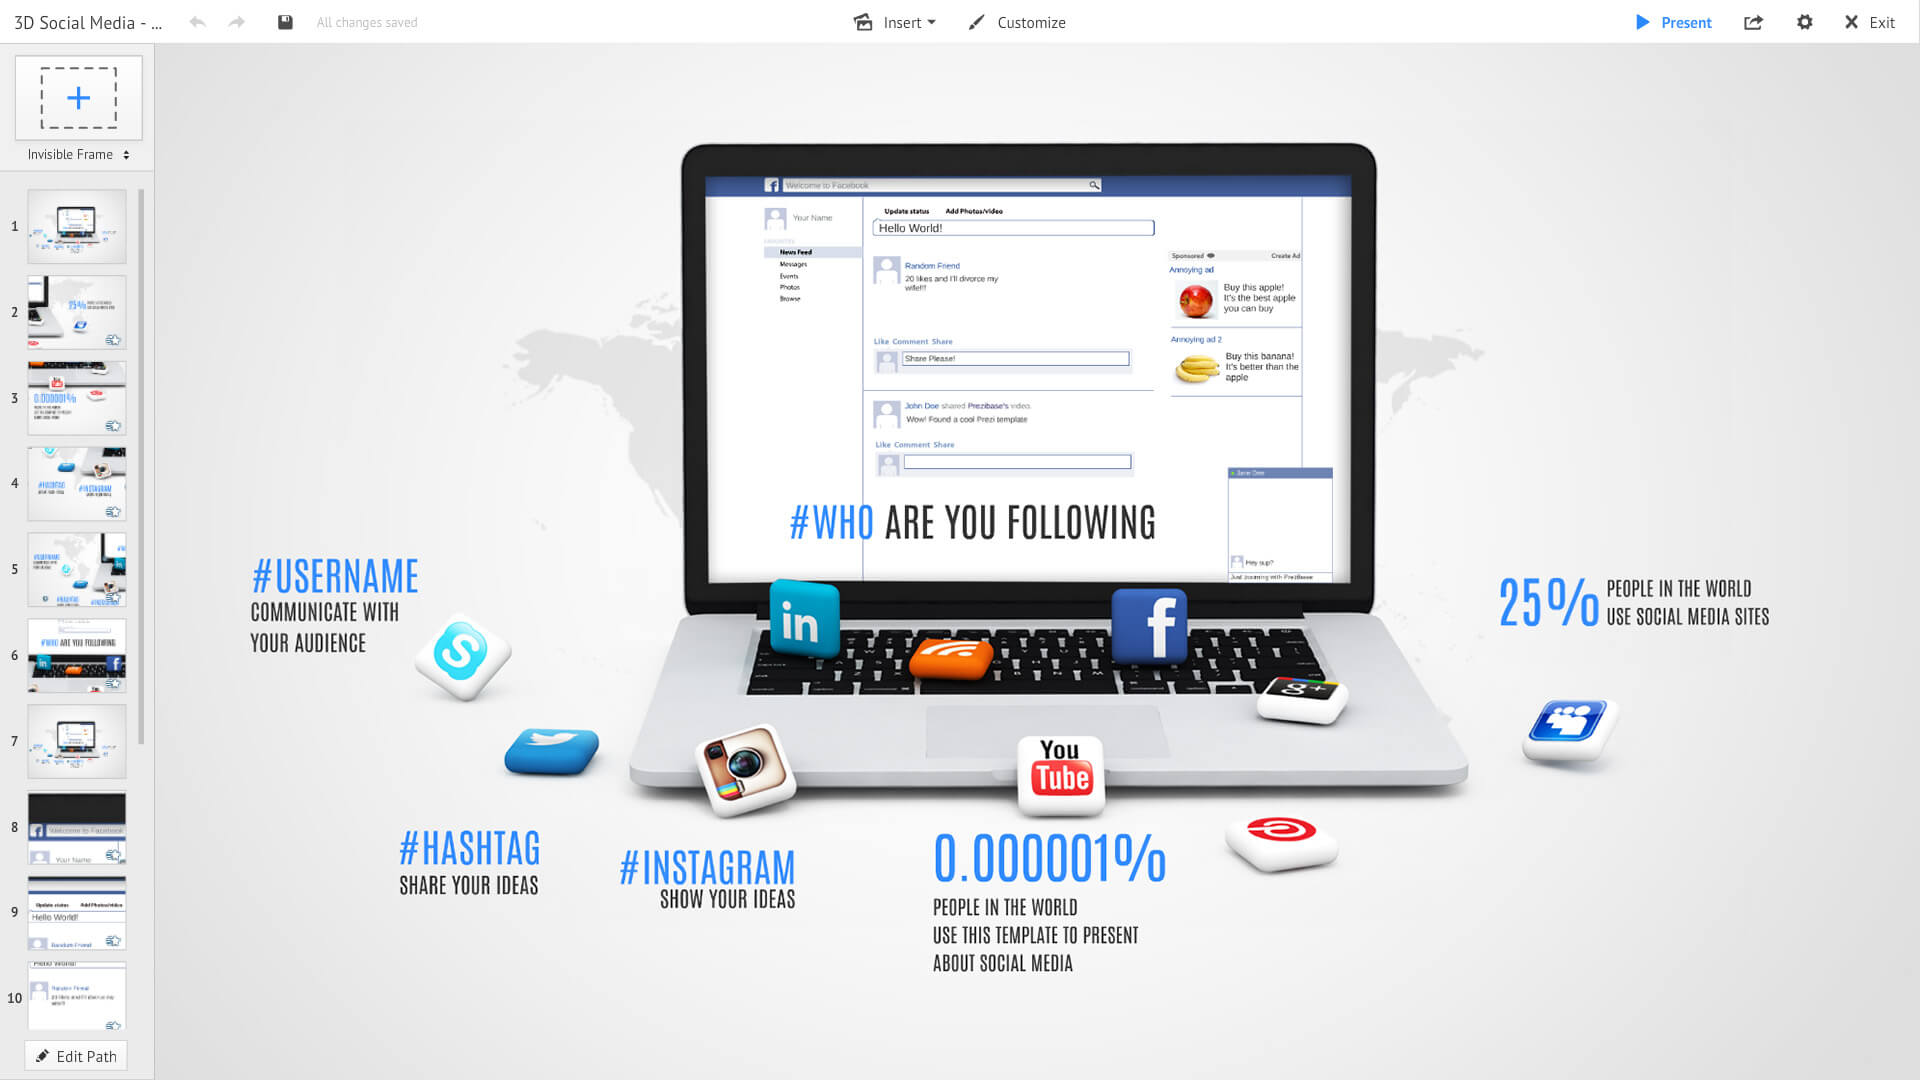 3d-social-media-laptop-facebook-interface-social-influencer-presentation-template-for-prezi